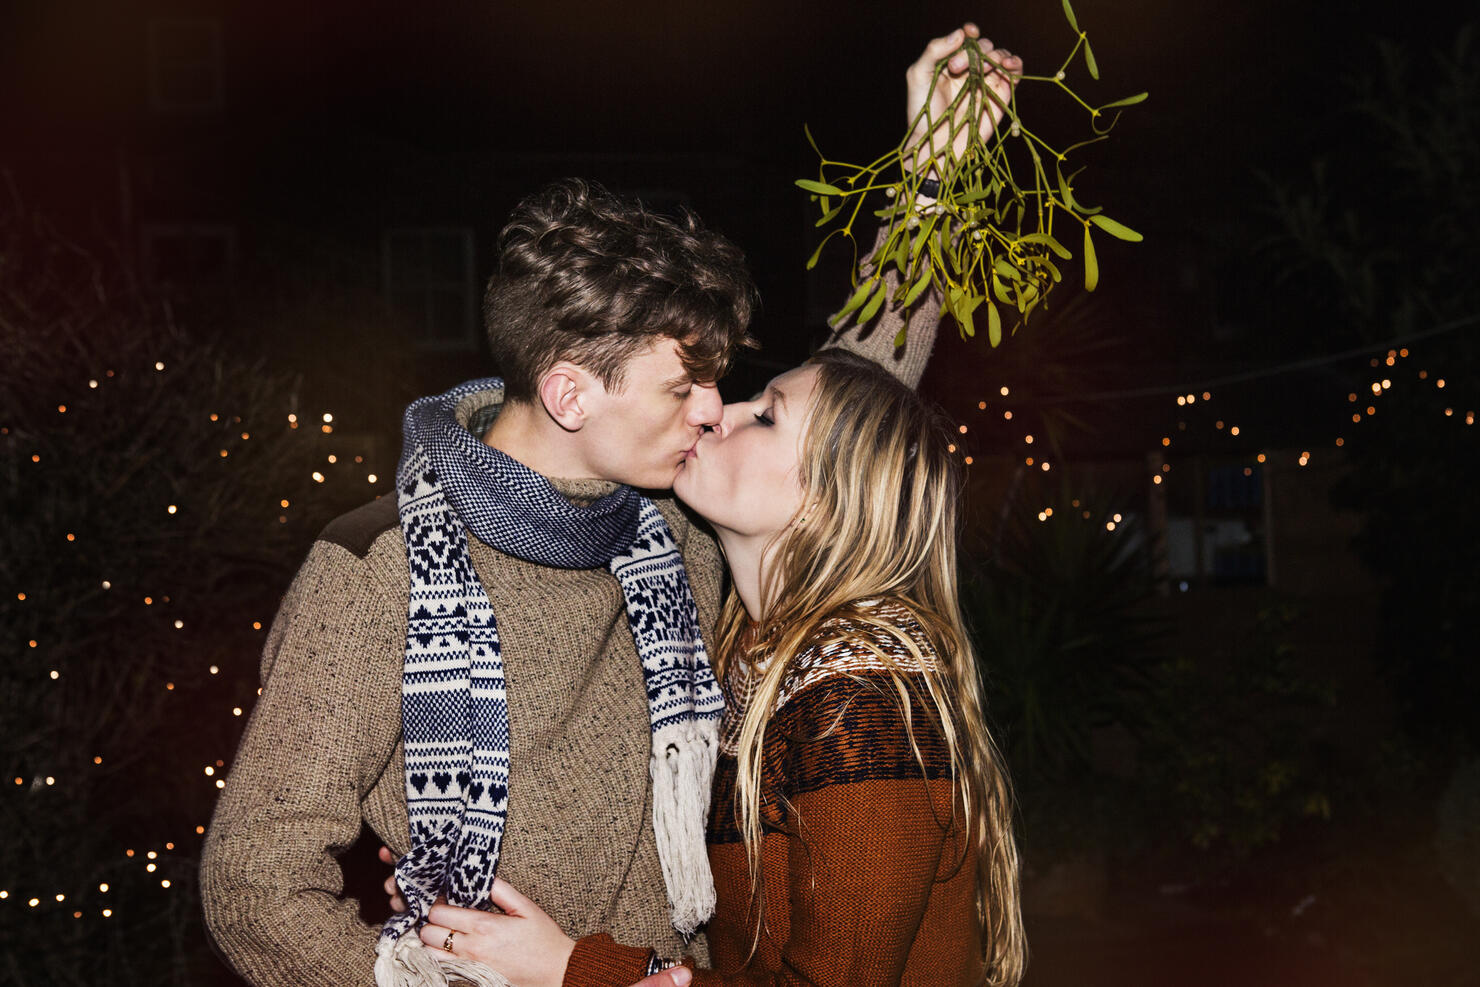 Couple kissing outdoors under mistletoe